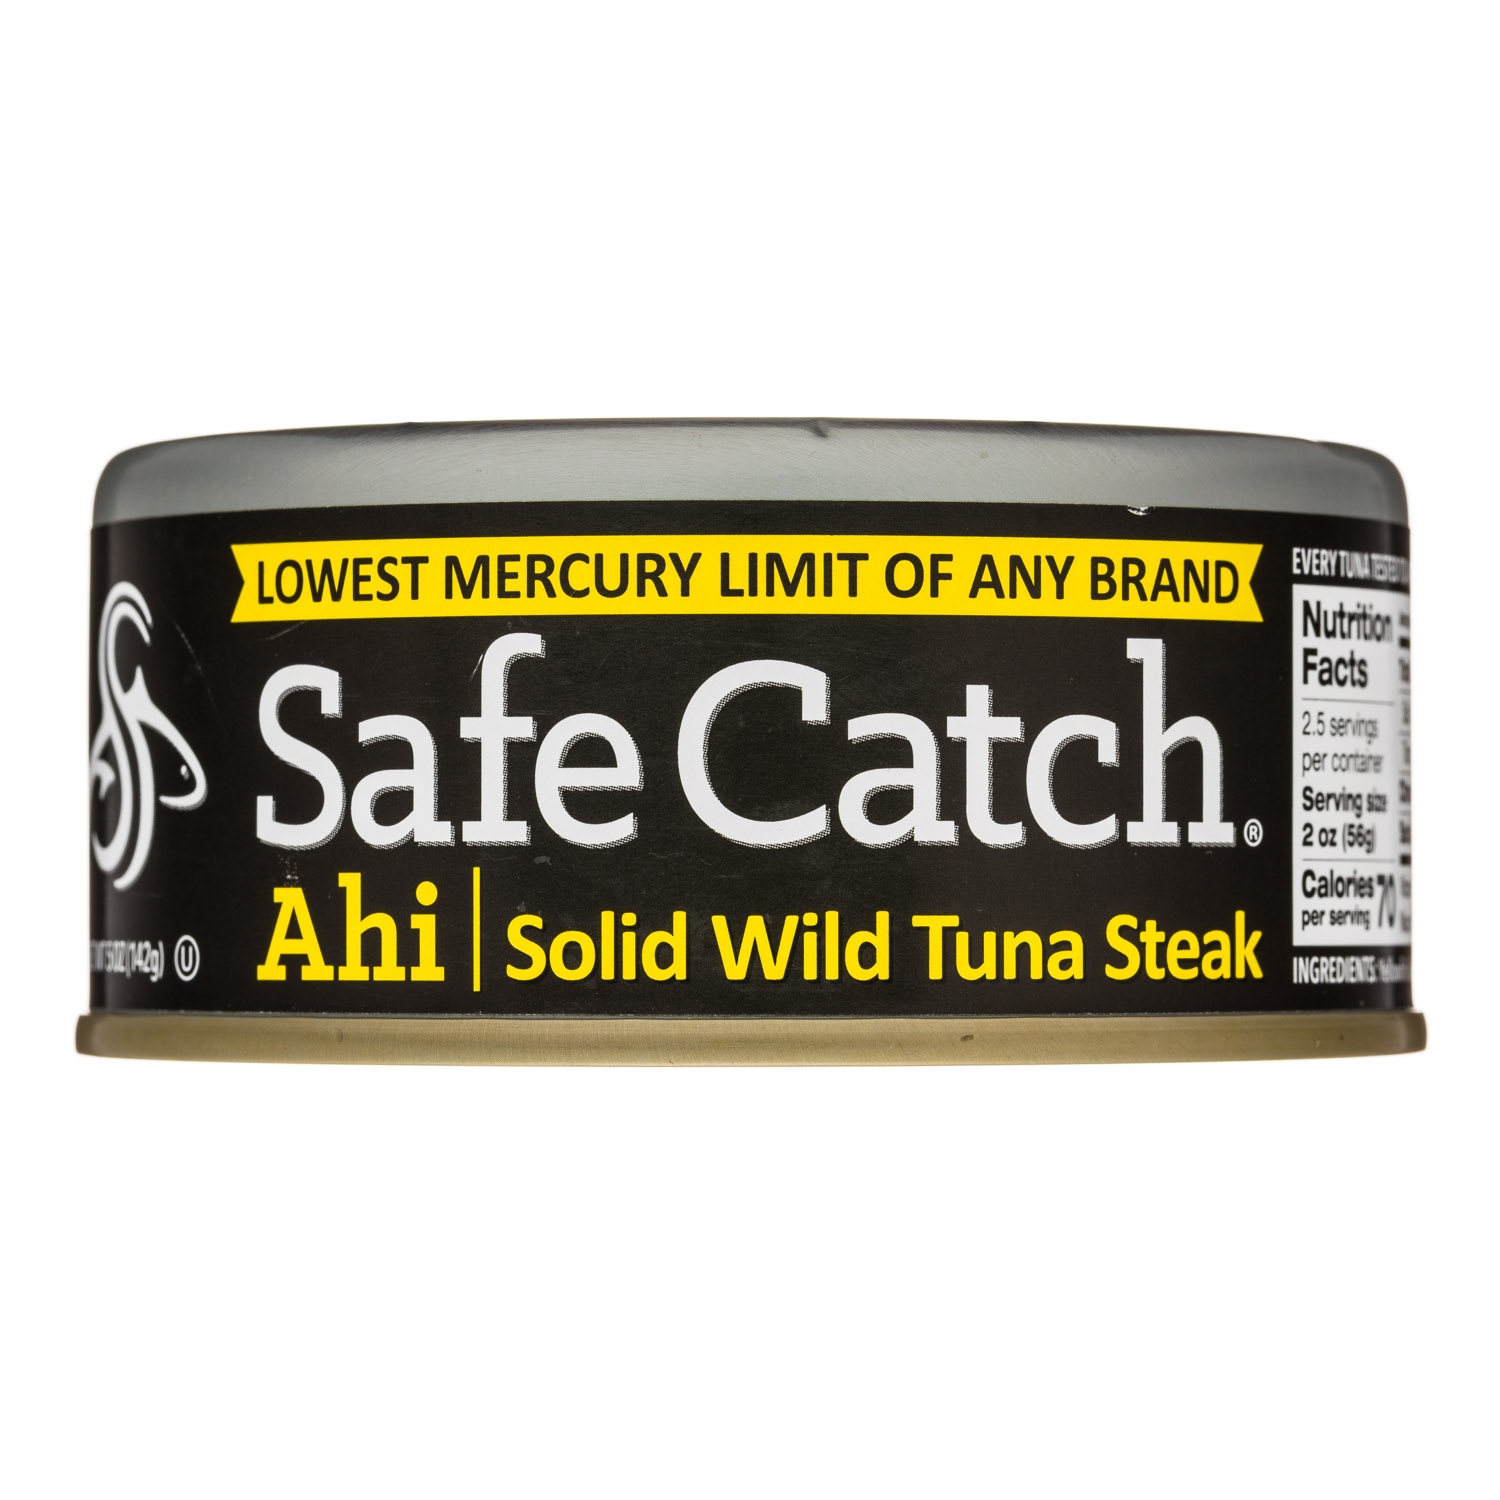 Ahi Solid Wild Tuna Steak